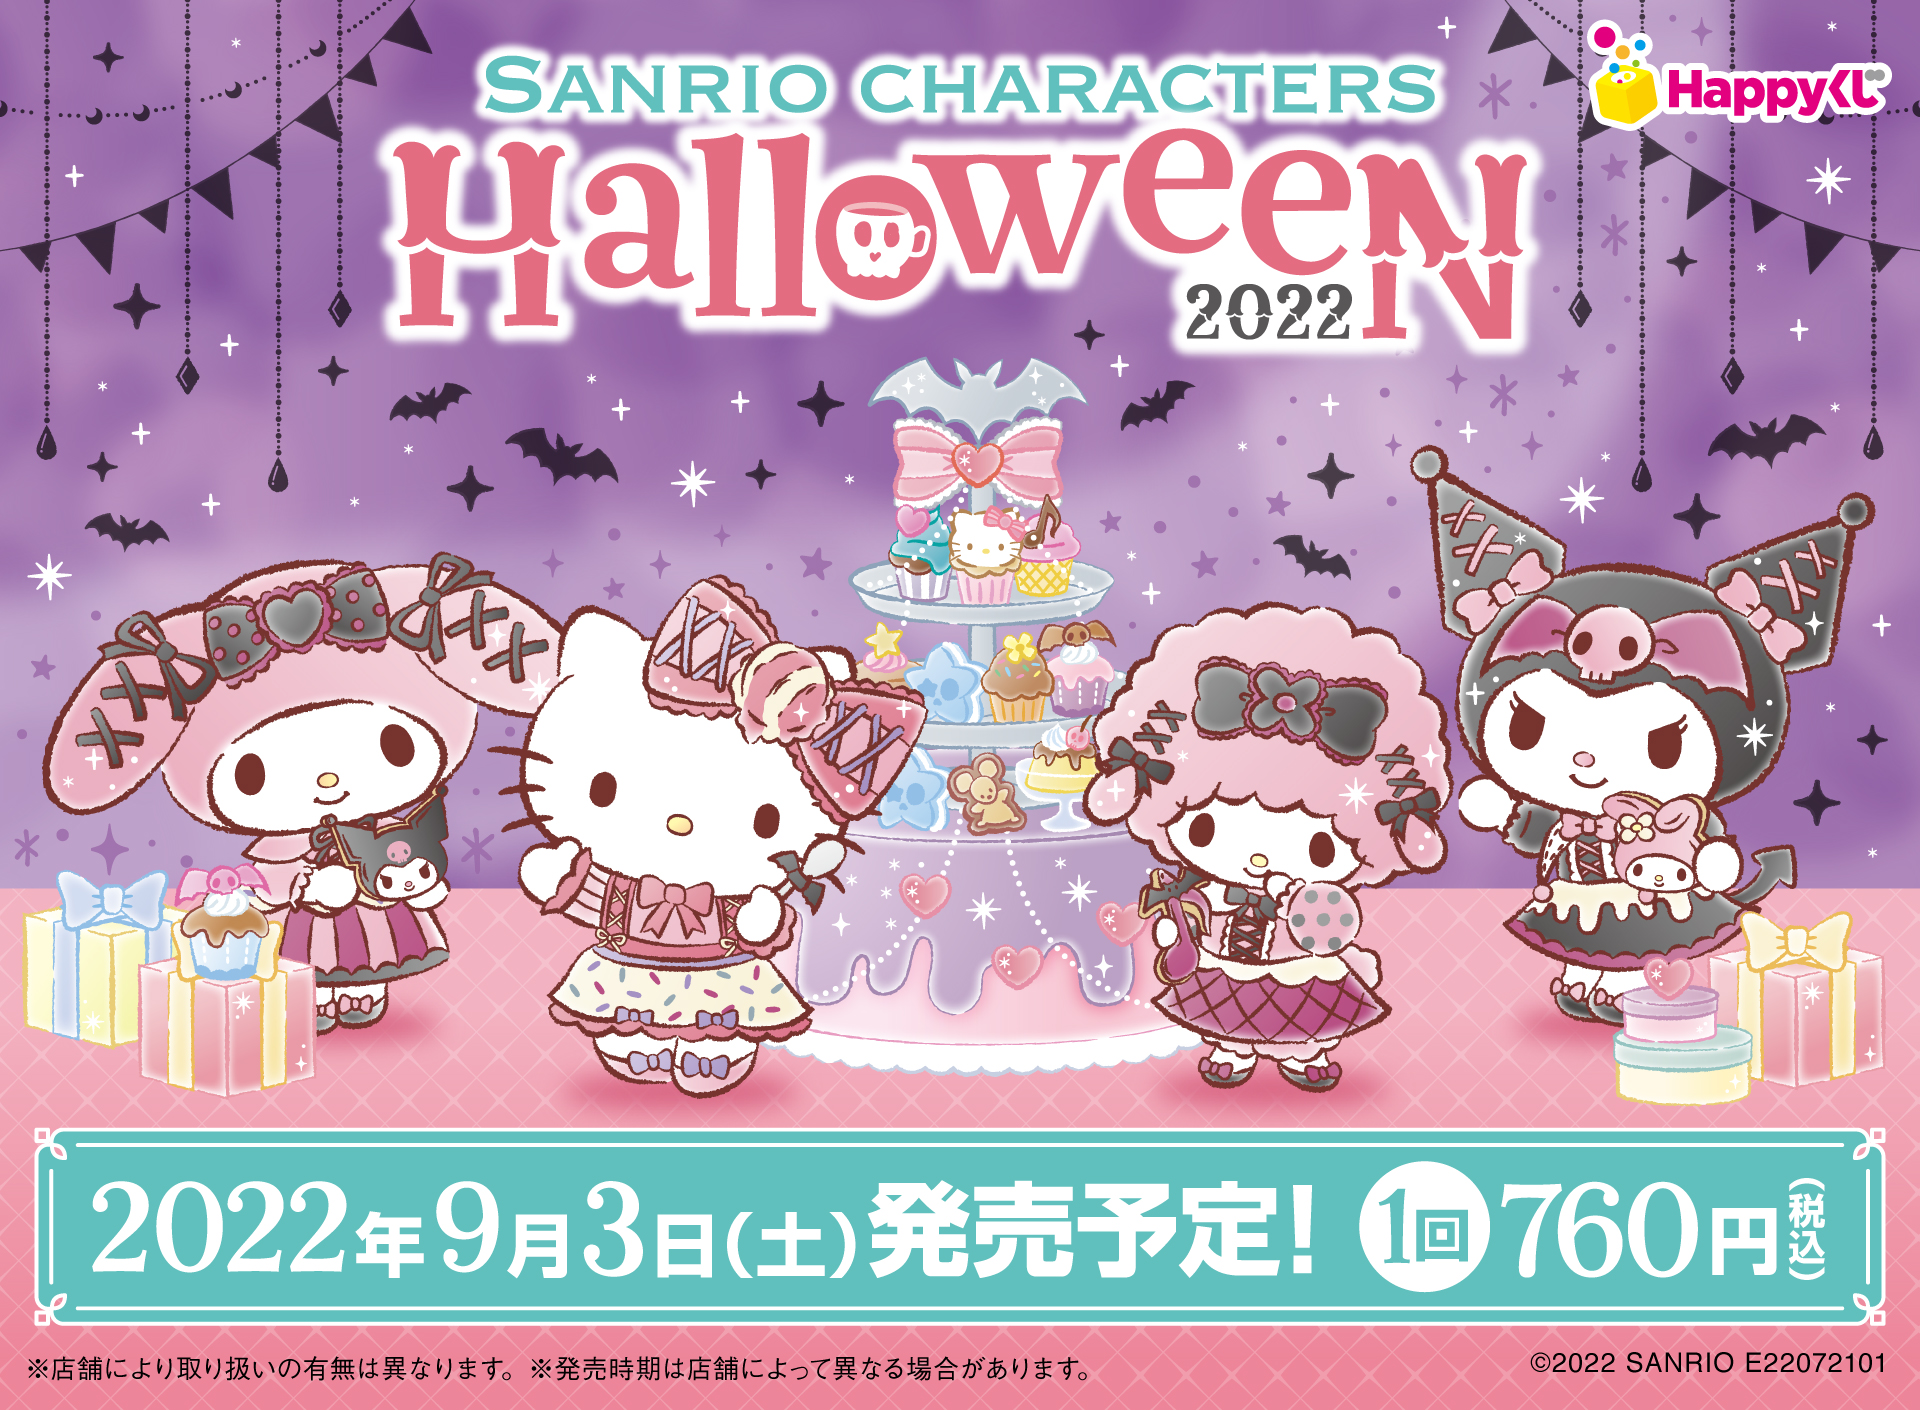 『Sanrio characters Halloween 2022』